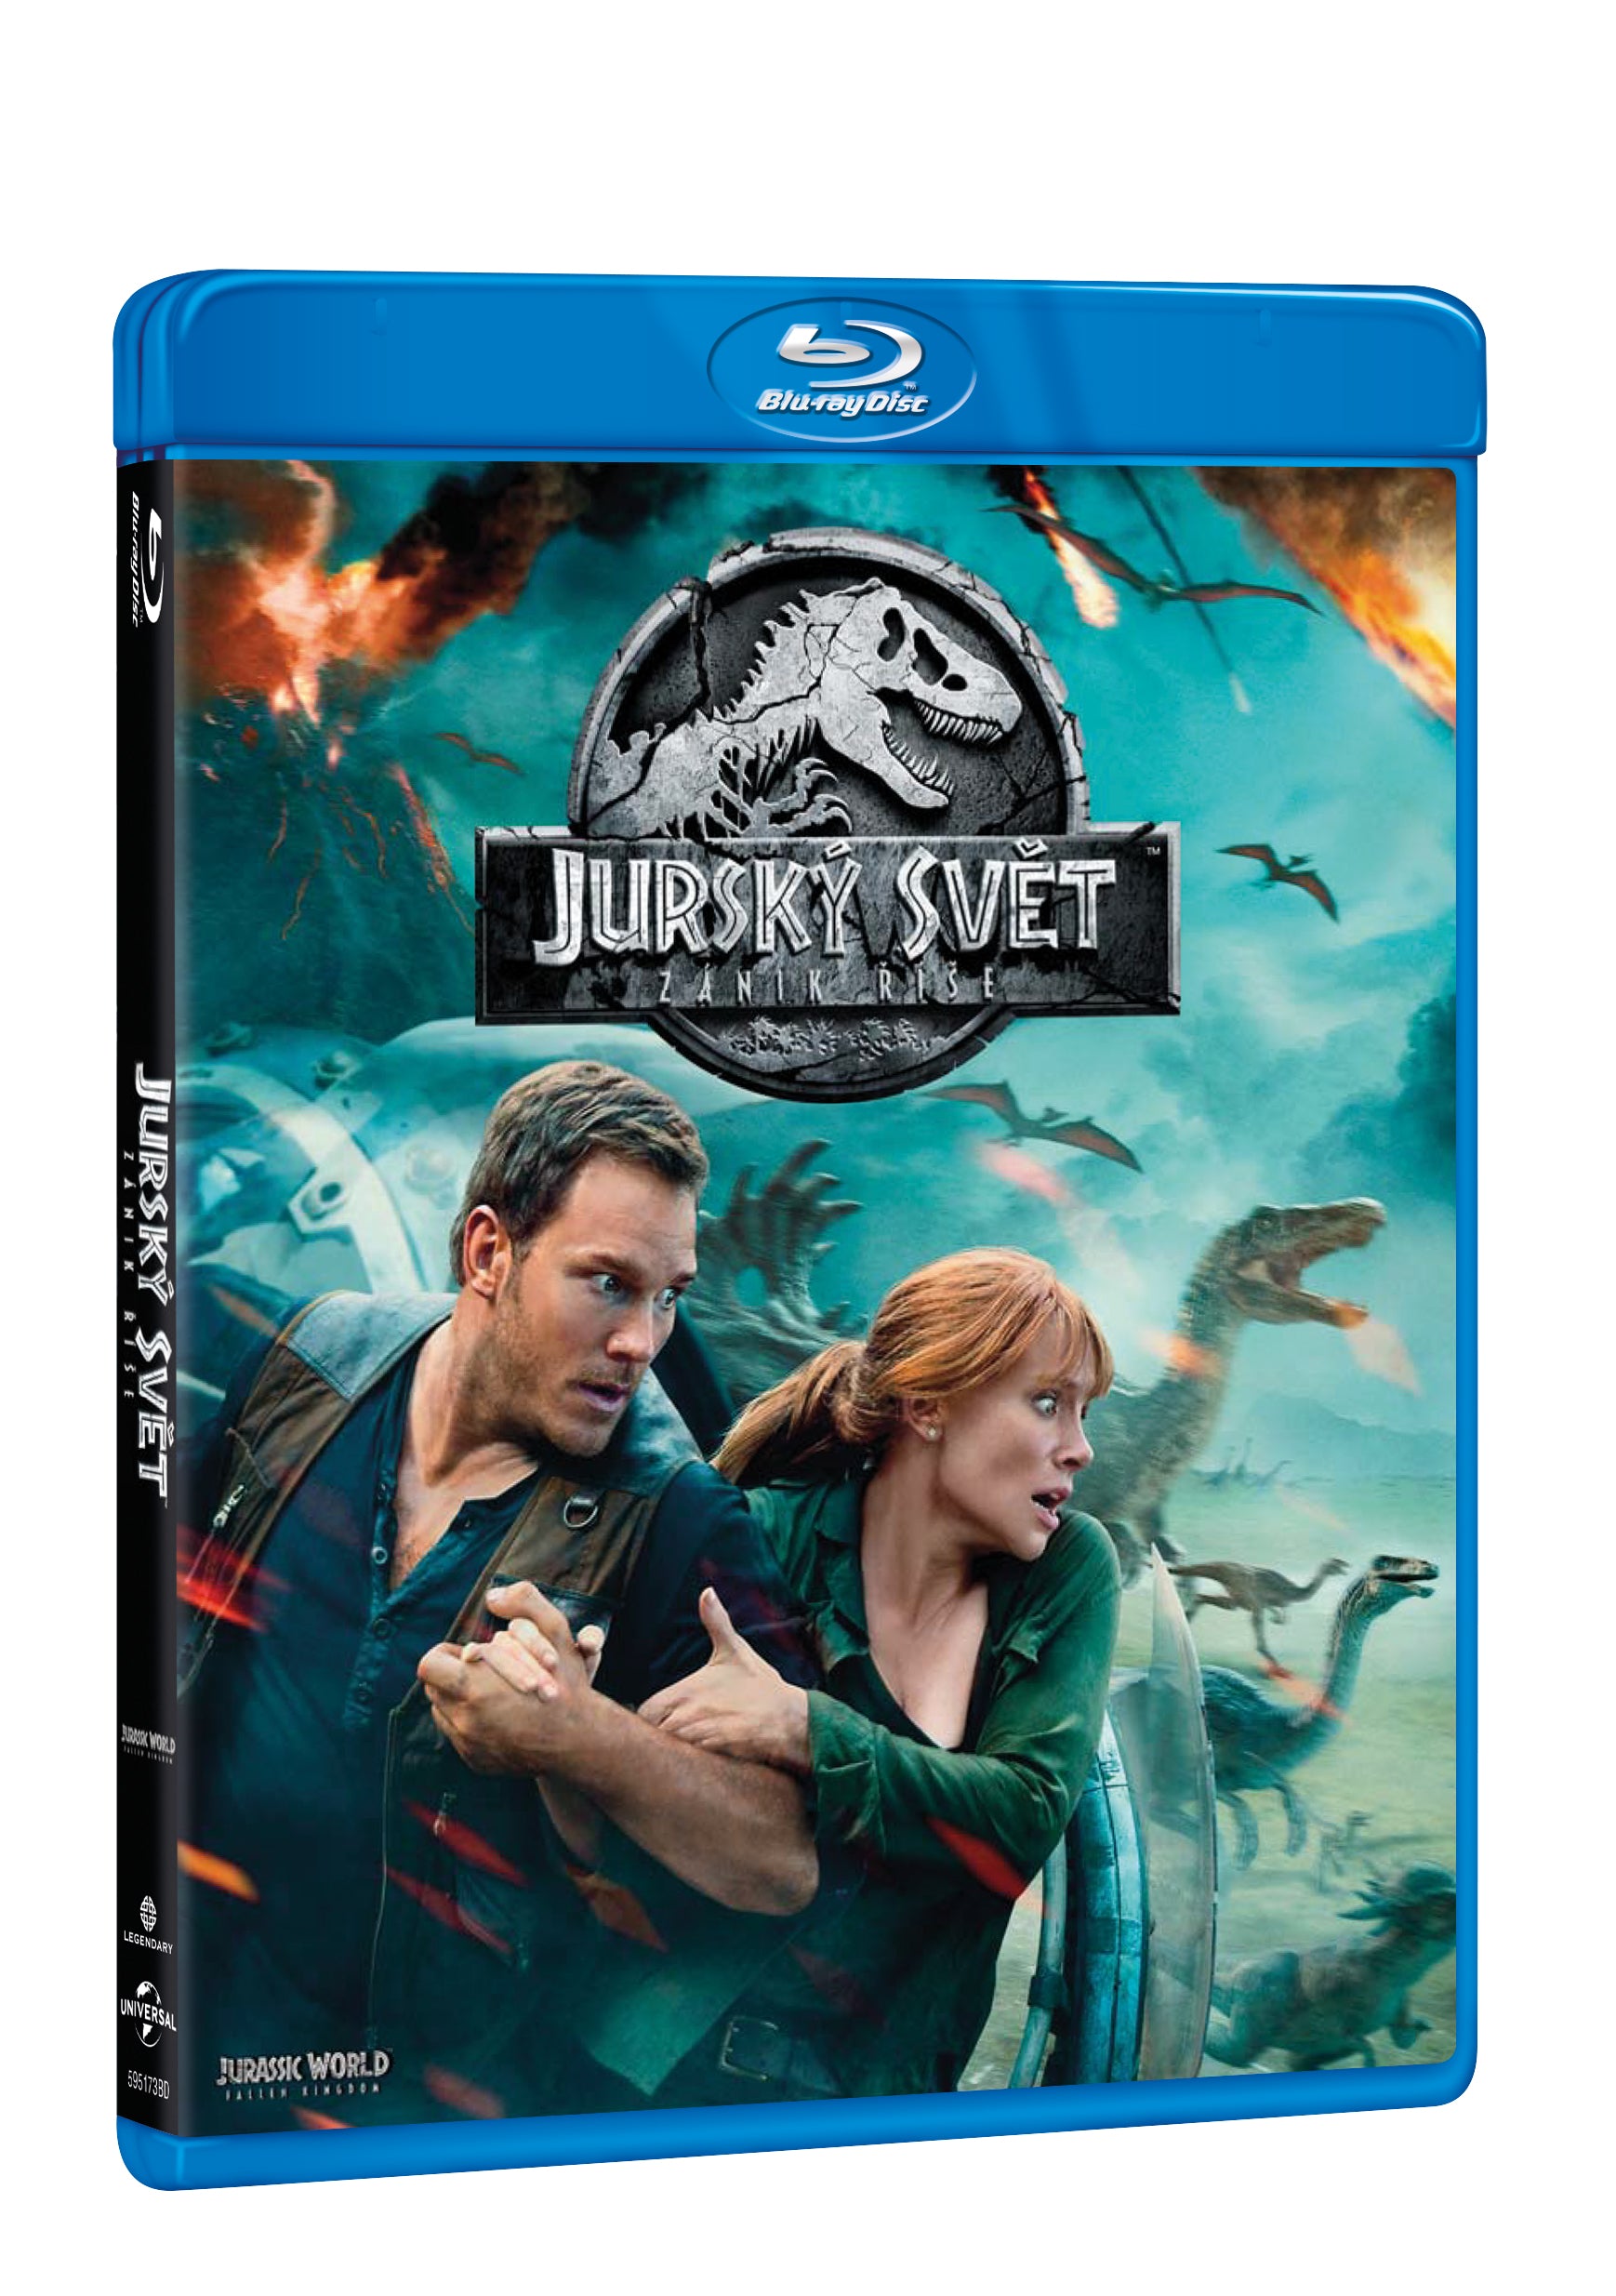 Jursky svet: Zanik rise BD / Jurassic World: Fallen Kingdom - Czech version